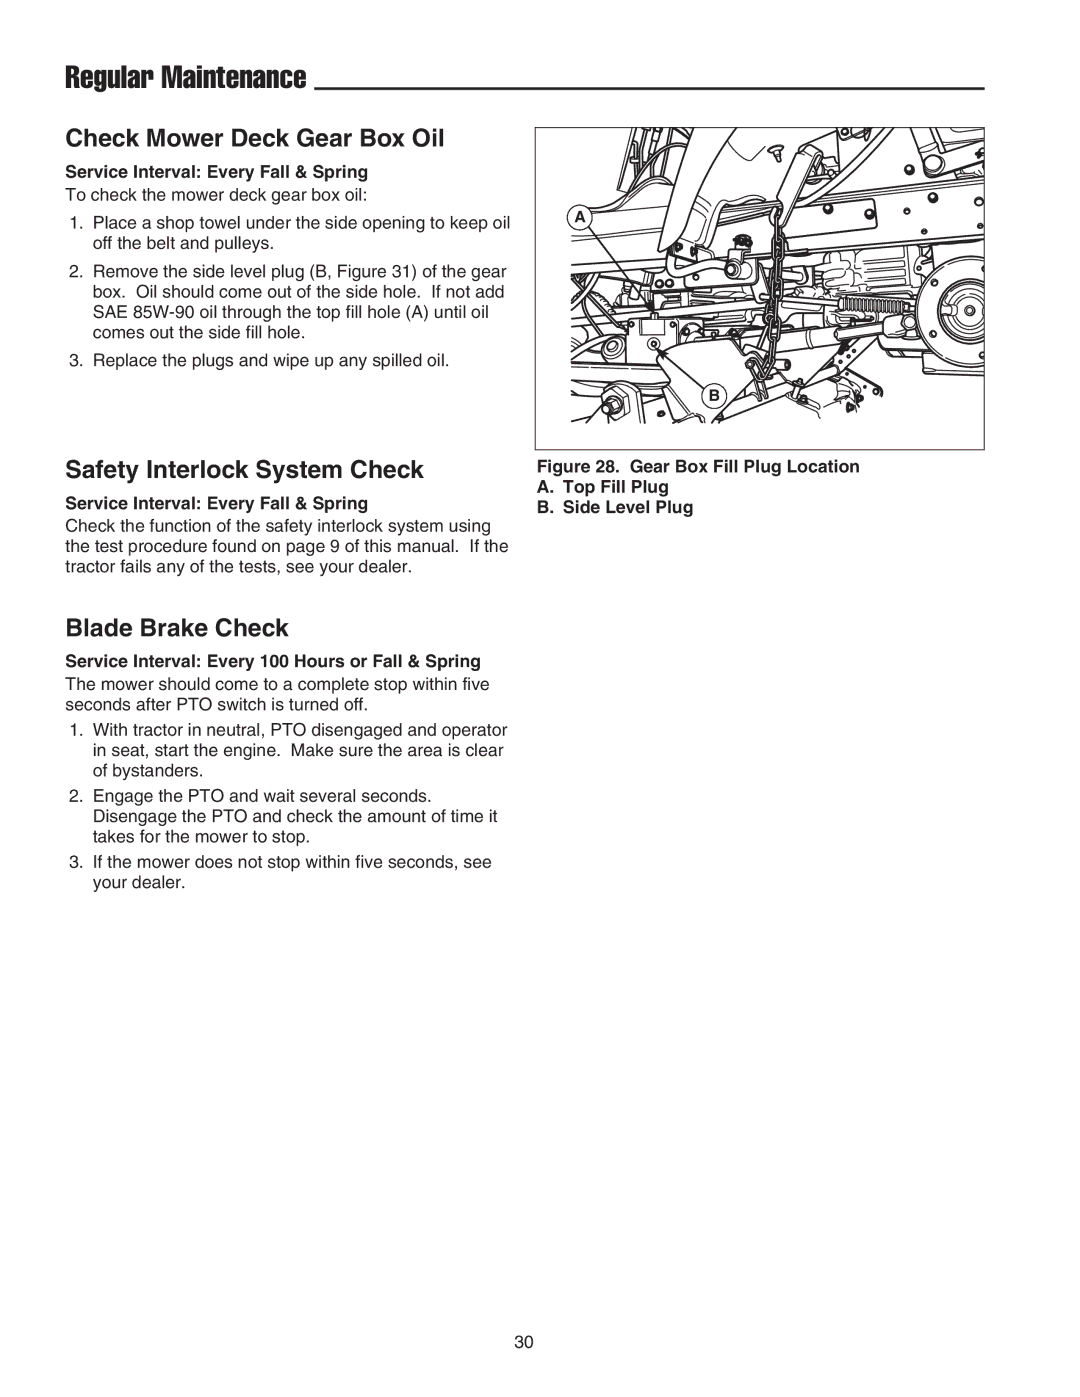 Snapper SGT27540D manual Check Mower Deck Gear Box Oil, Safety Interlock System Check, Blade Brake Check 